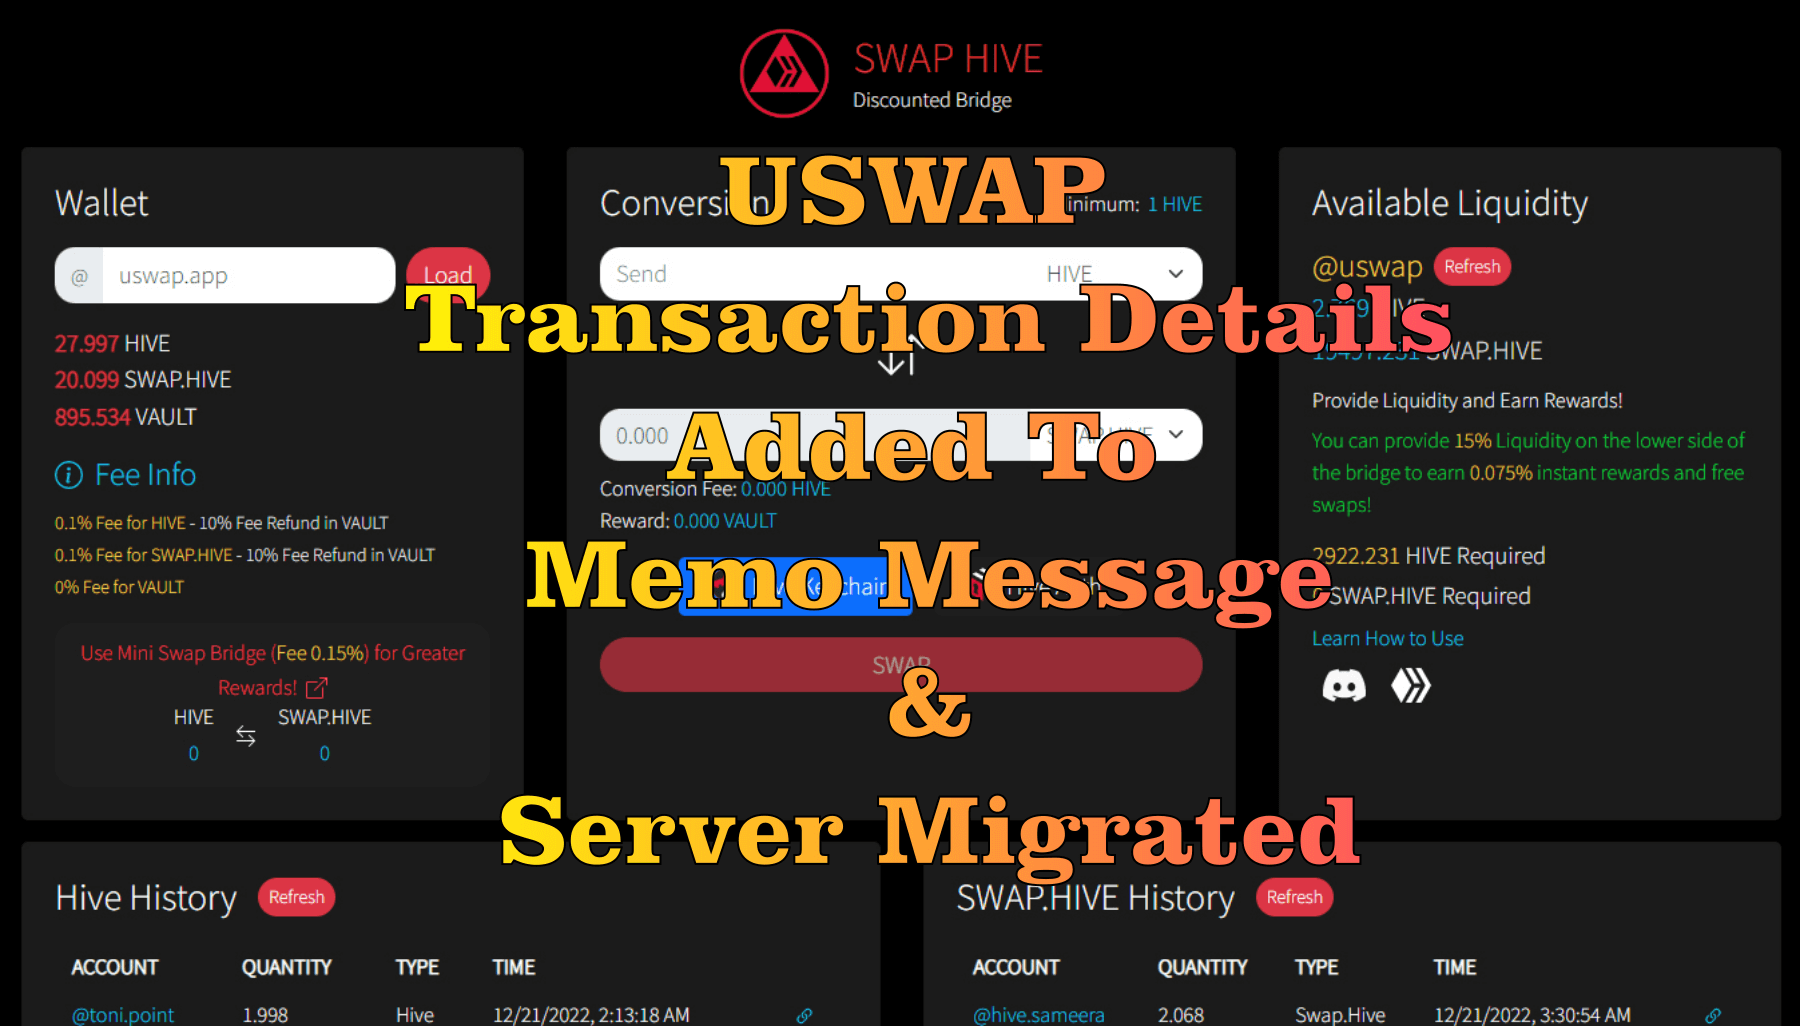 @theguruasia/uswap-trx-details-and-server-migration